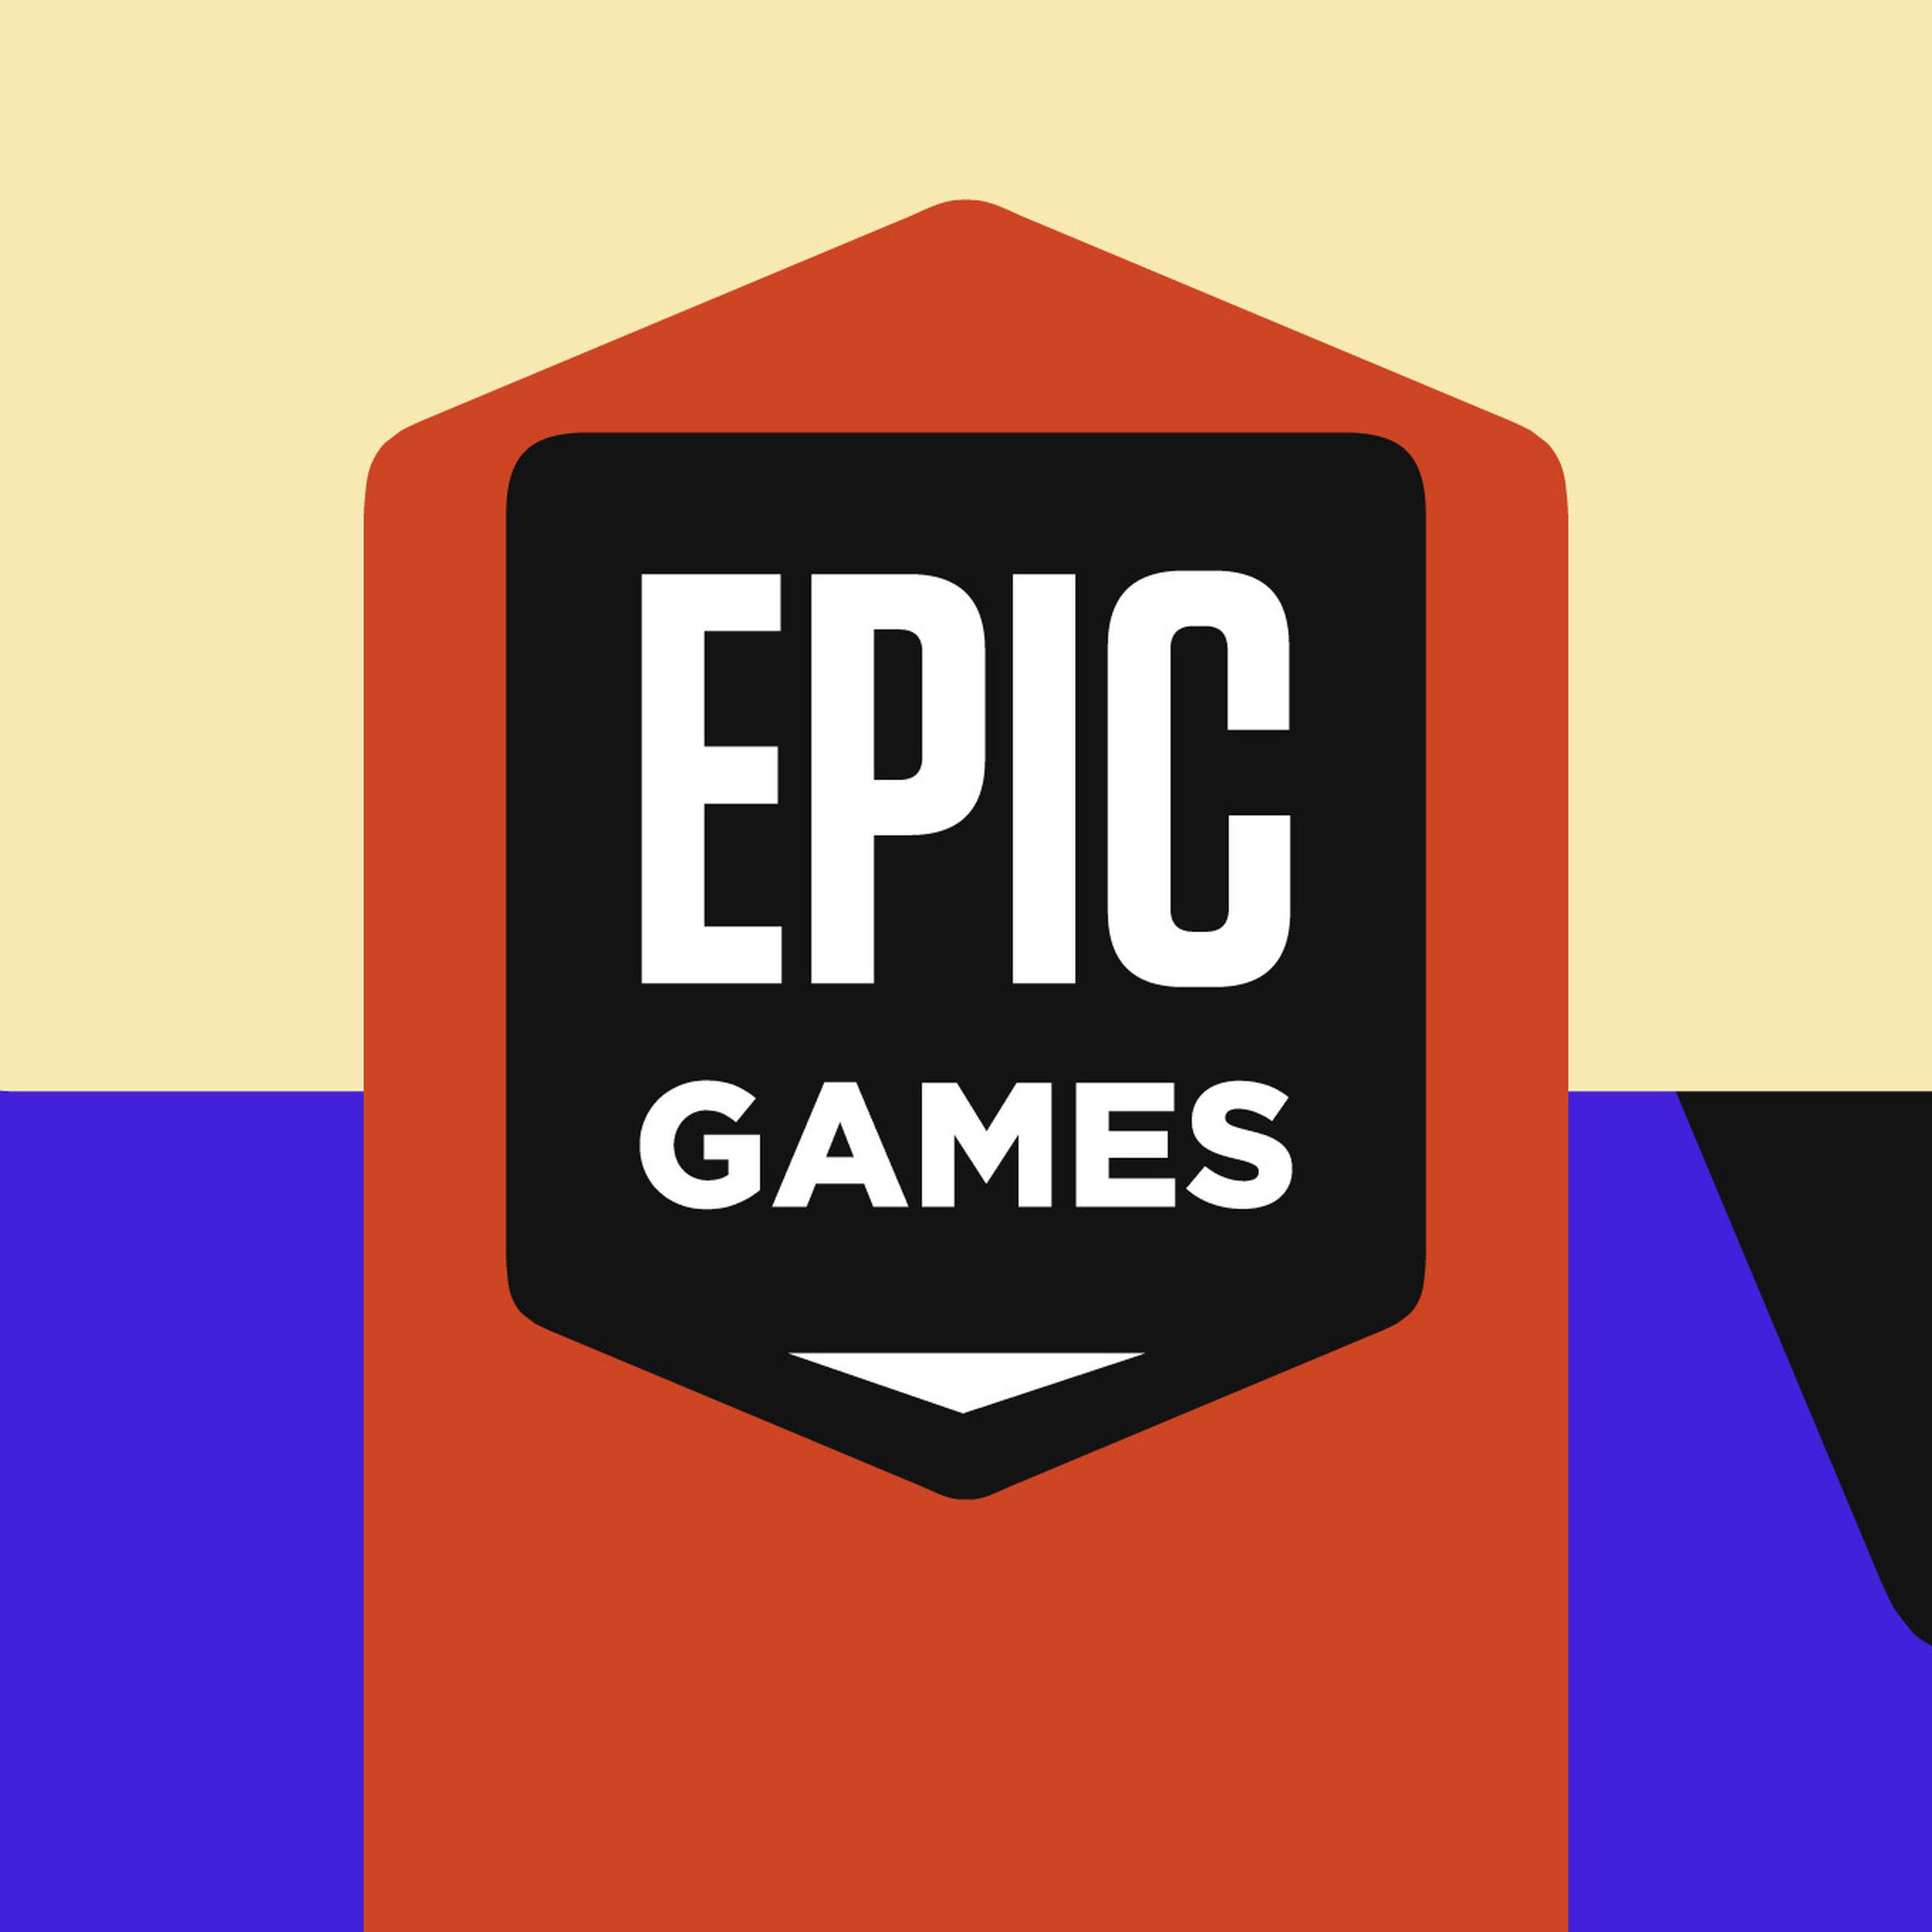 An illustration of Epic Games’ logo.